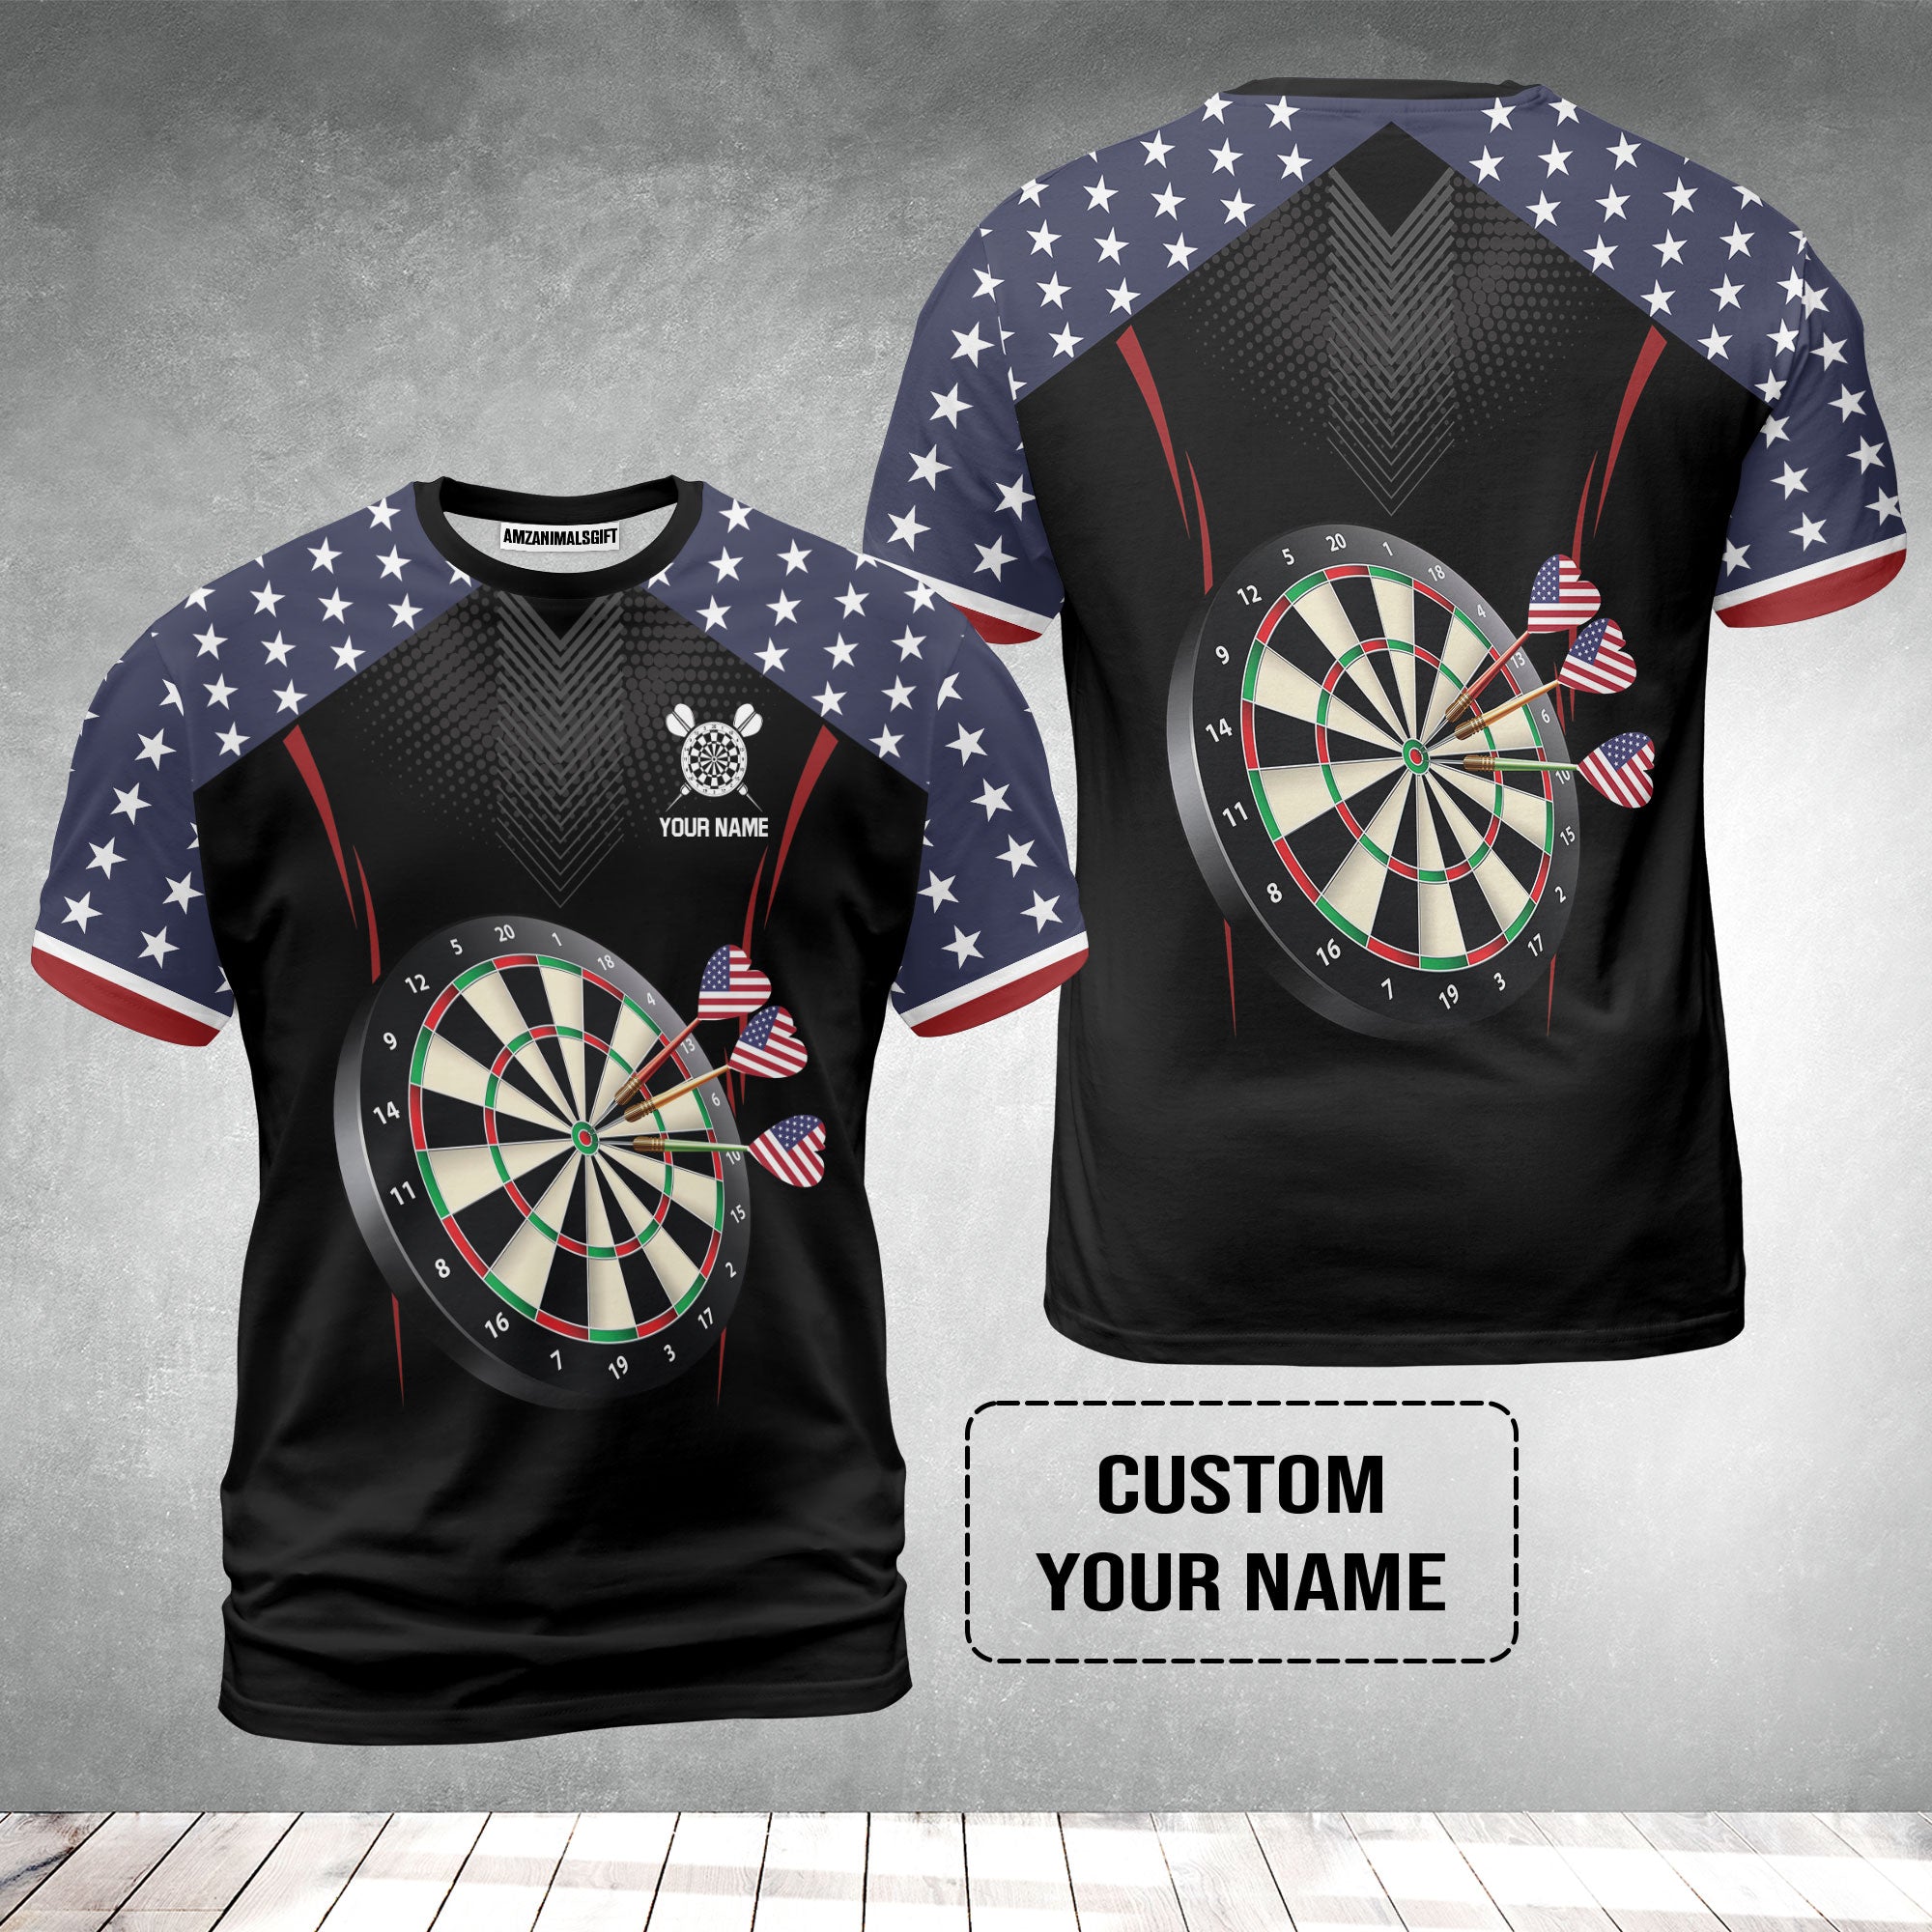 Personalised Darts T-Shirt, Darts American Flag Black Background Custom Name T-Shirt - Perfect Gift For Men, Darts Player, Darts Lover